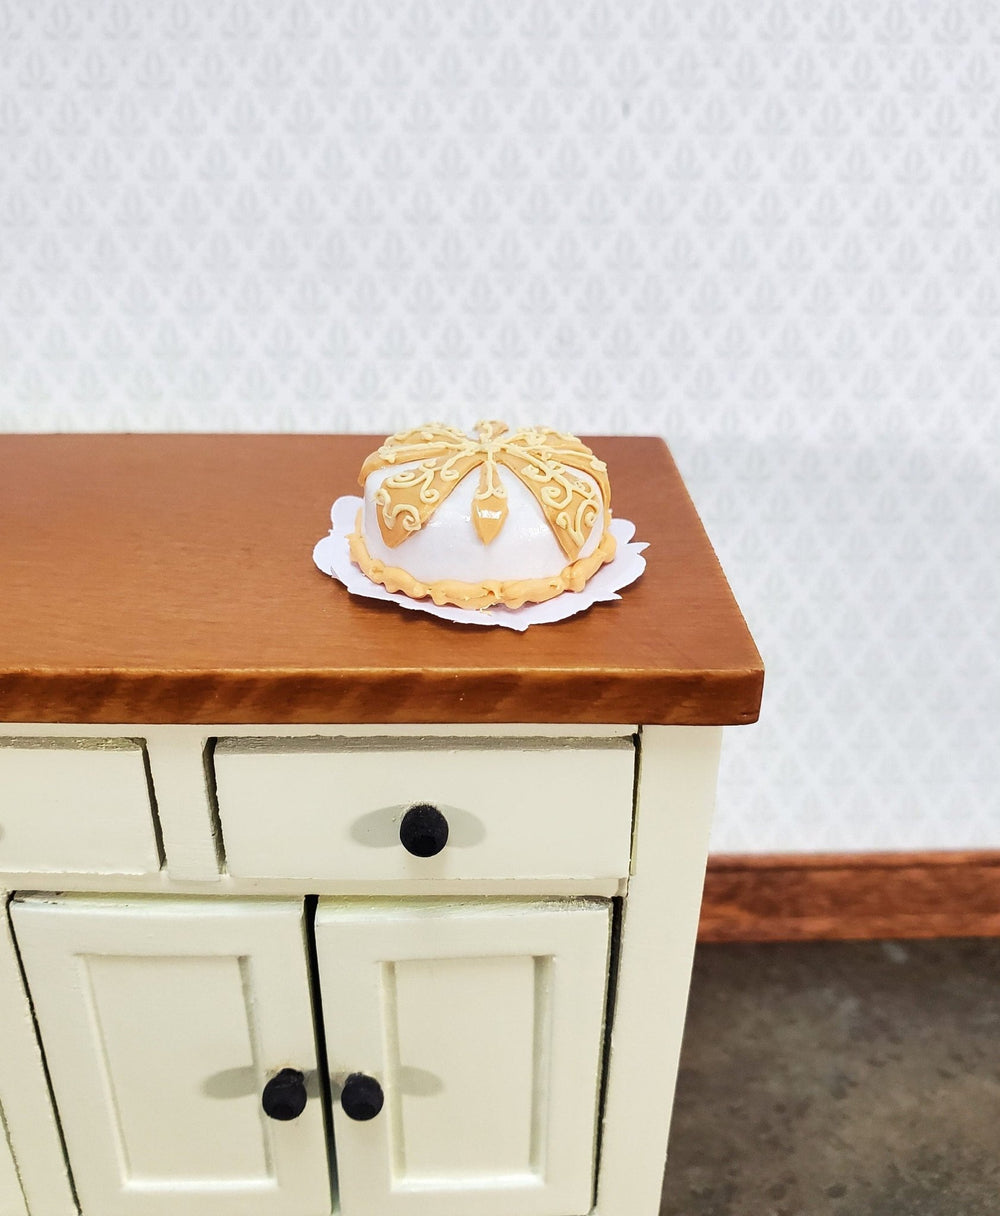 Dollhouse Cake Orange Pastry Round 1:12 Scale Miniature Dessert Food - Miniature Crush